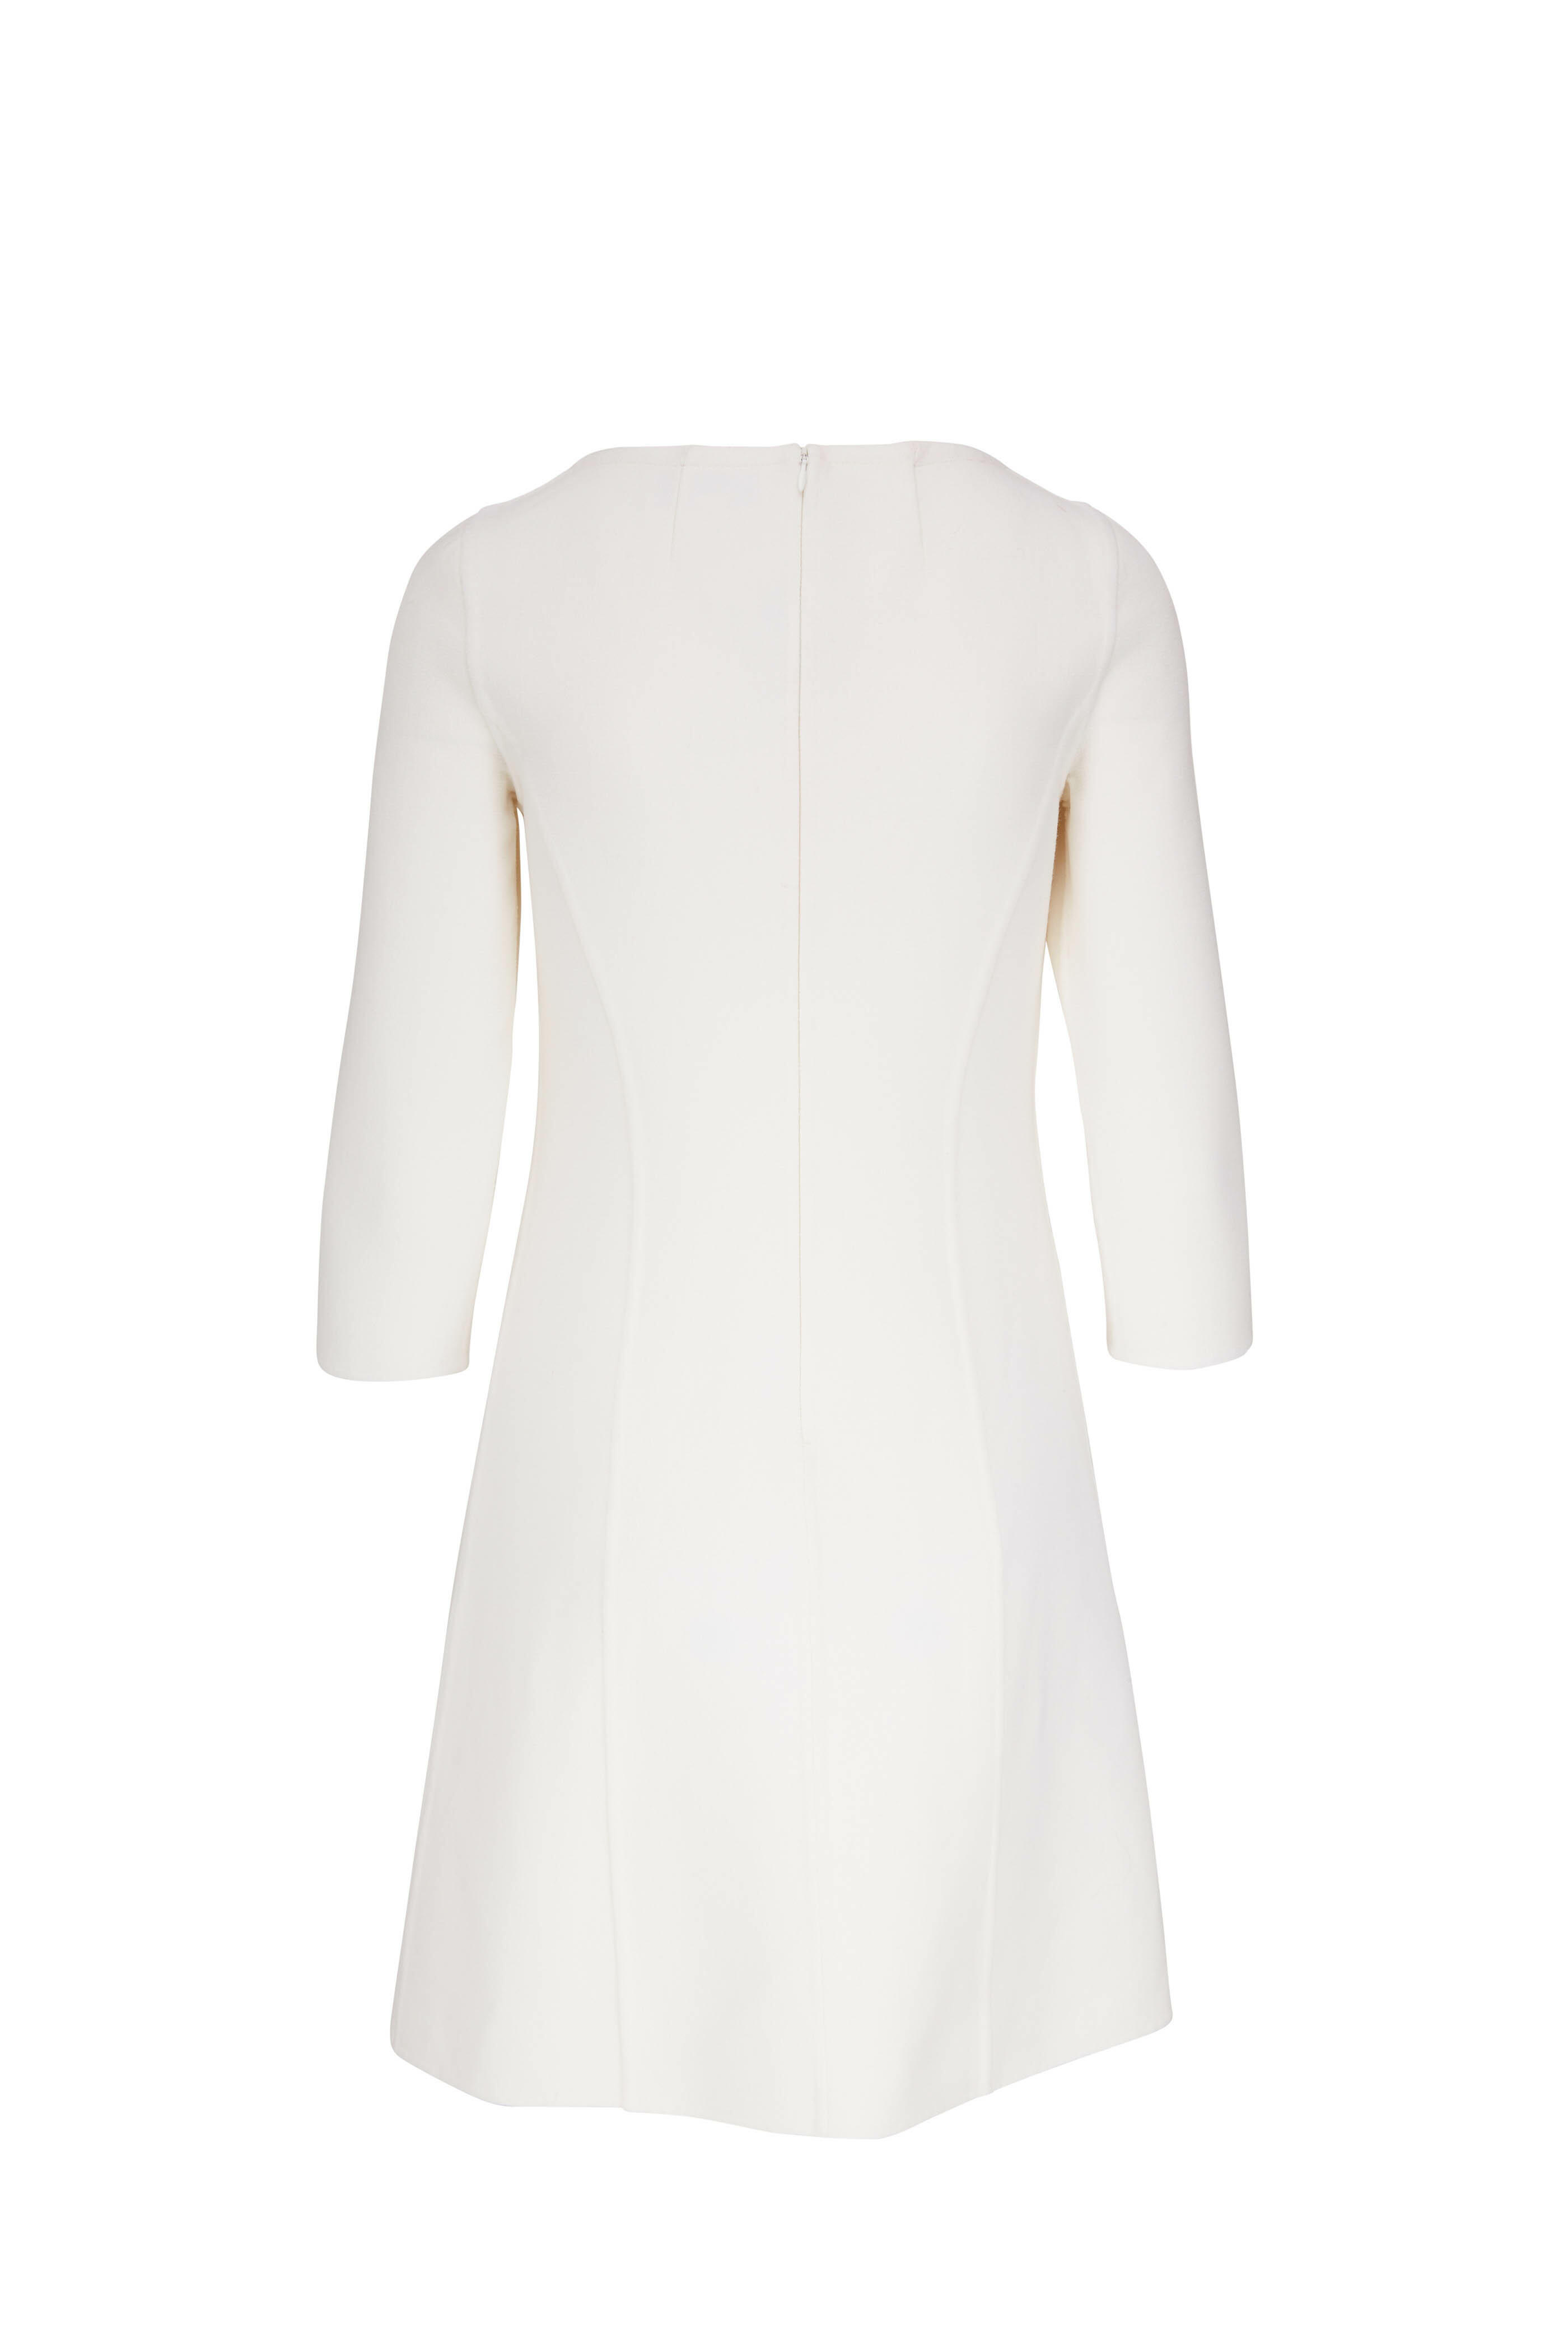 Dress Shift Wool Three-Quarter Michael - Kors Collection Sleeve White